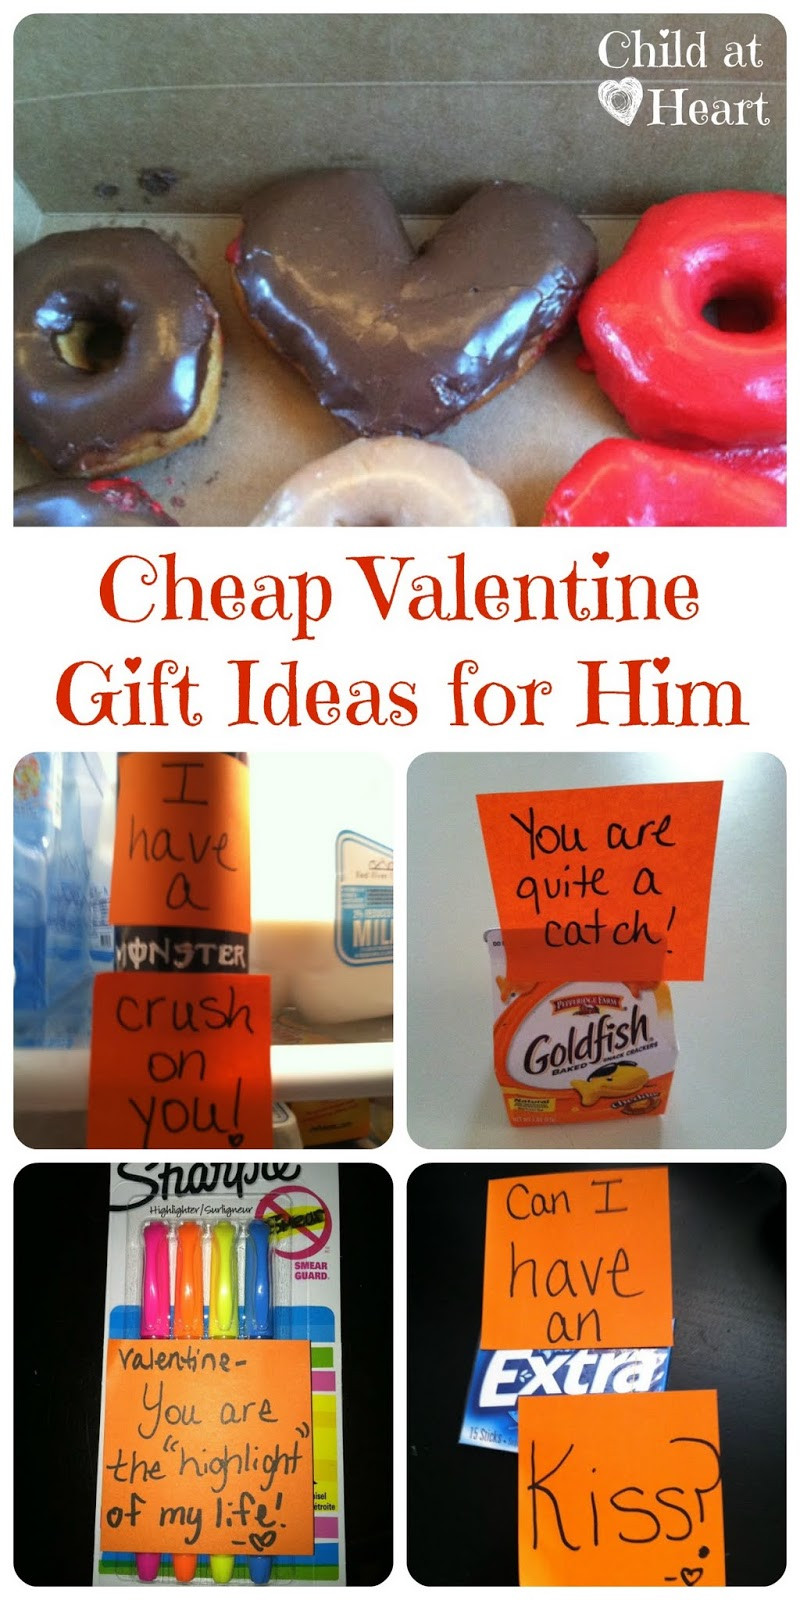 Diy Valentine Gift Ideas For Him
 Cheap Valentine Gift Ideas for Him Child at Heart Blog